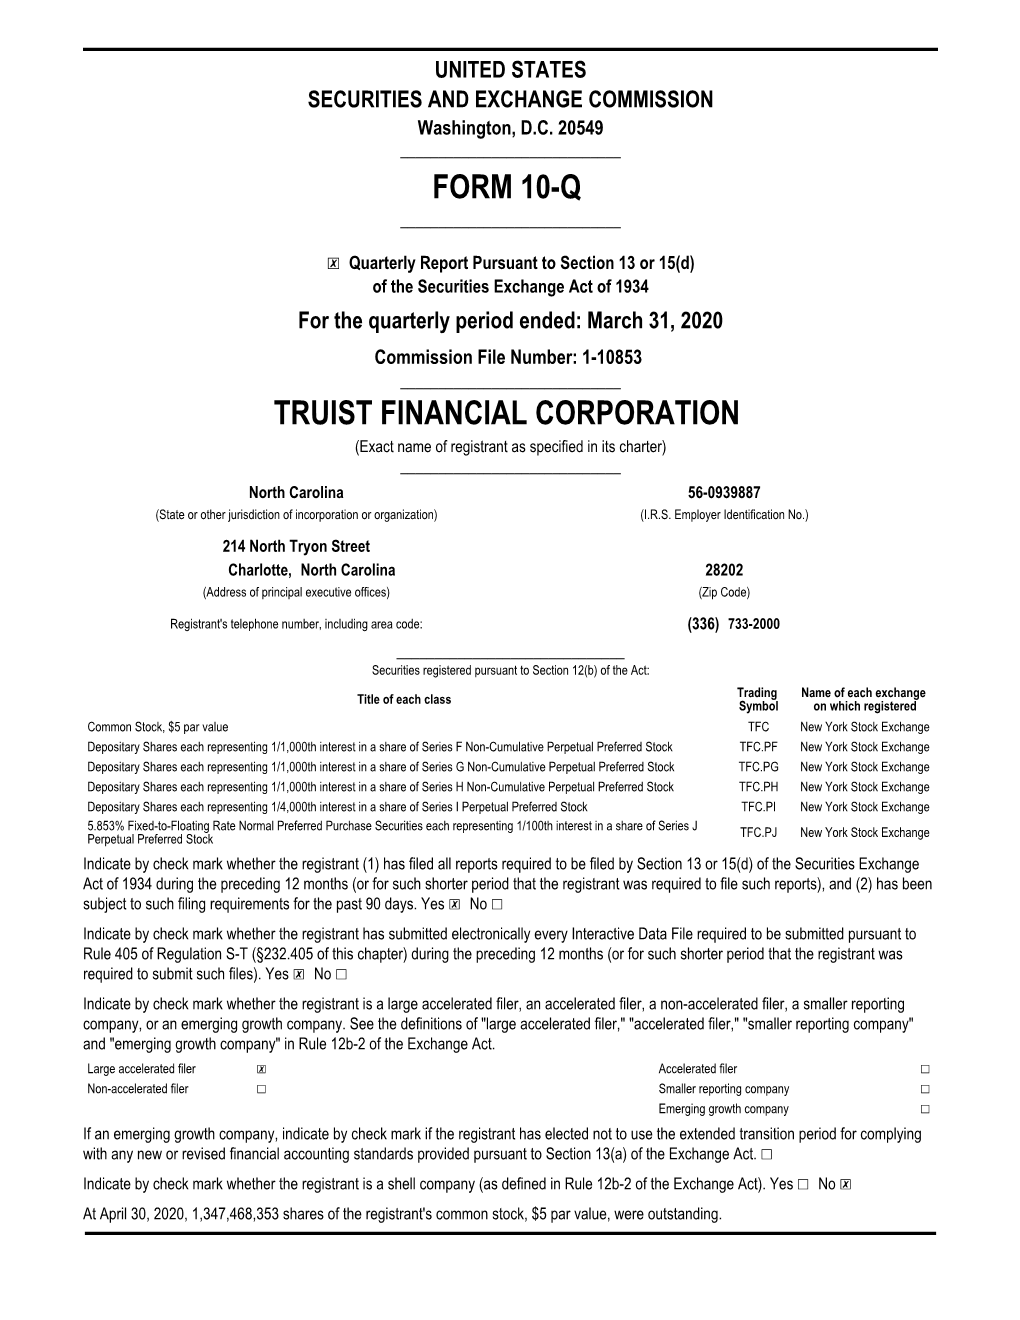 Form 10-Q Truist Financial Corporation